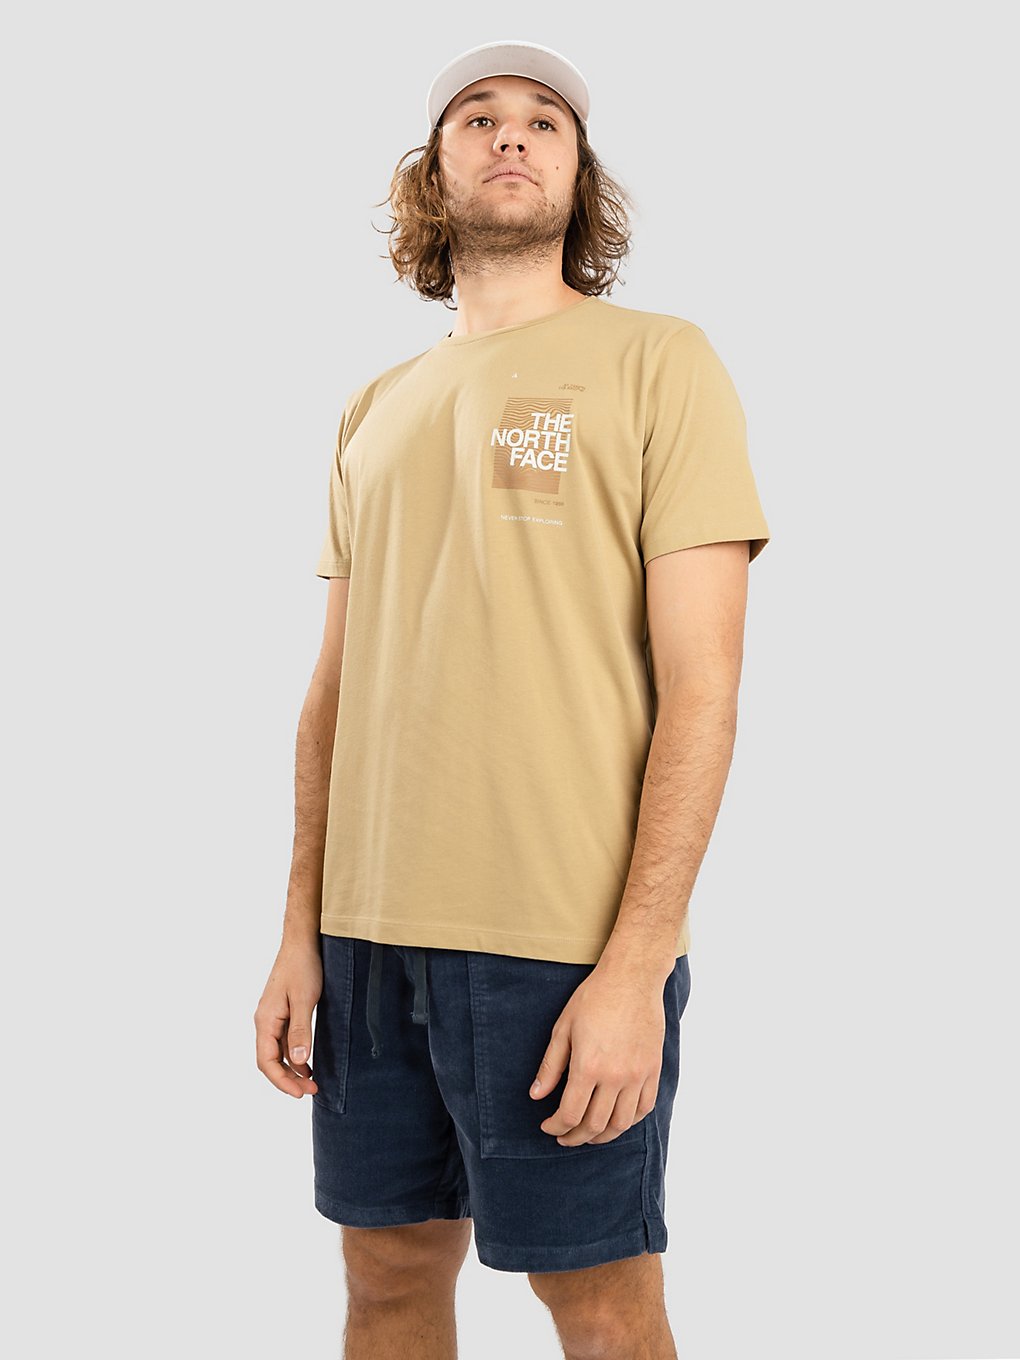 THE NORTH FACE Foundation Graphic T-Shirt khaki stone kaufen